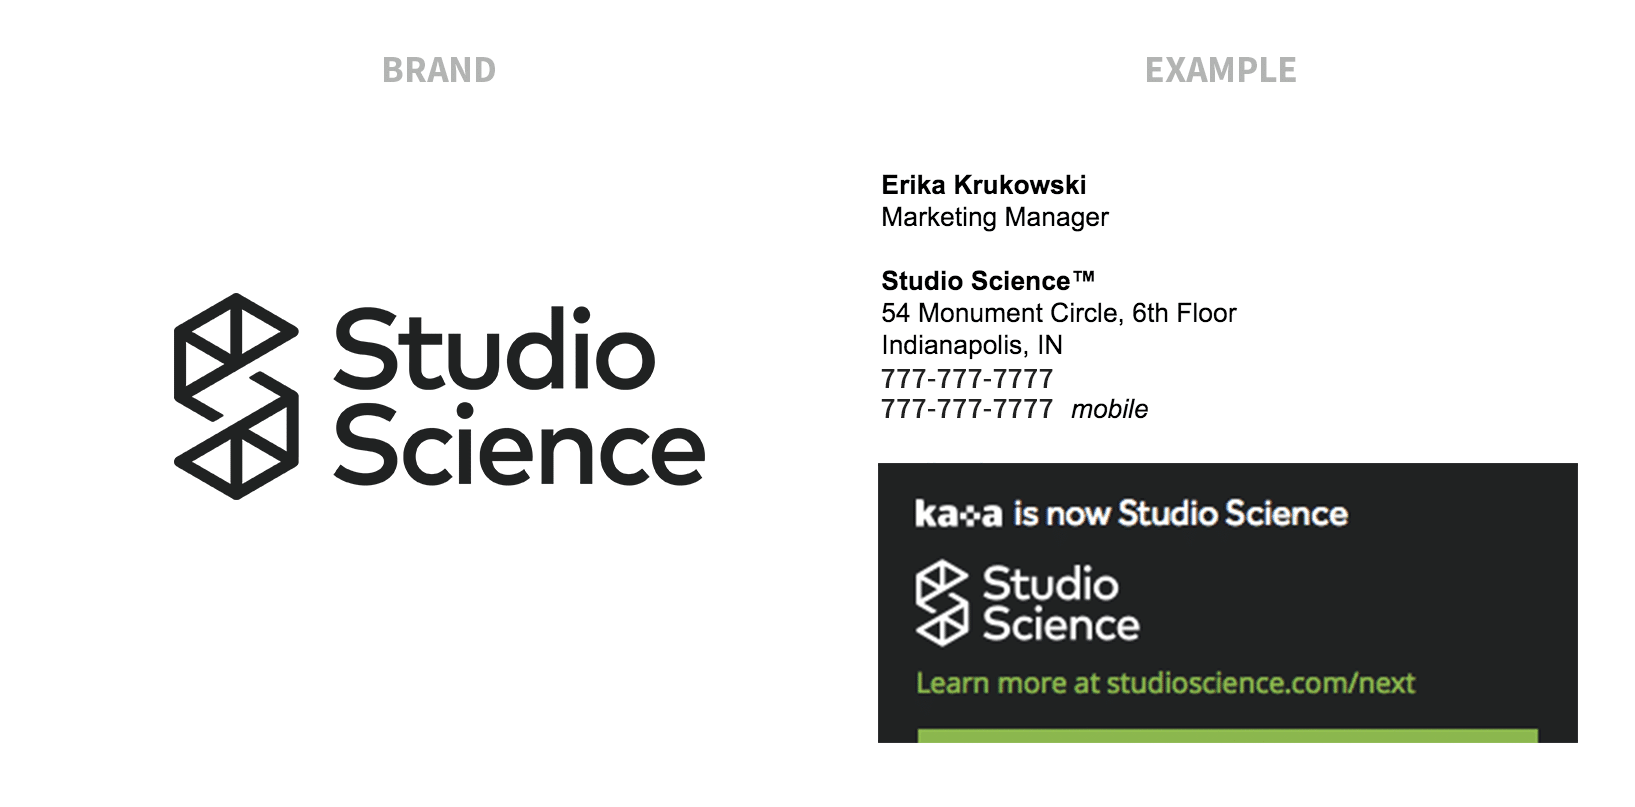 BusinessServicesExample_StudioScience